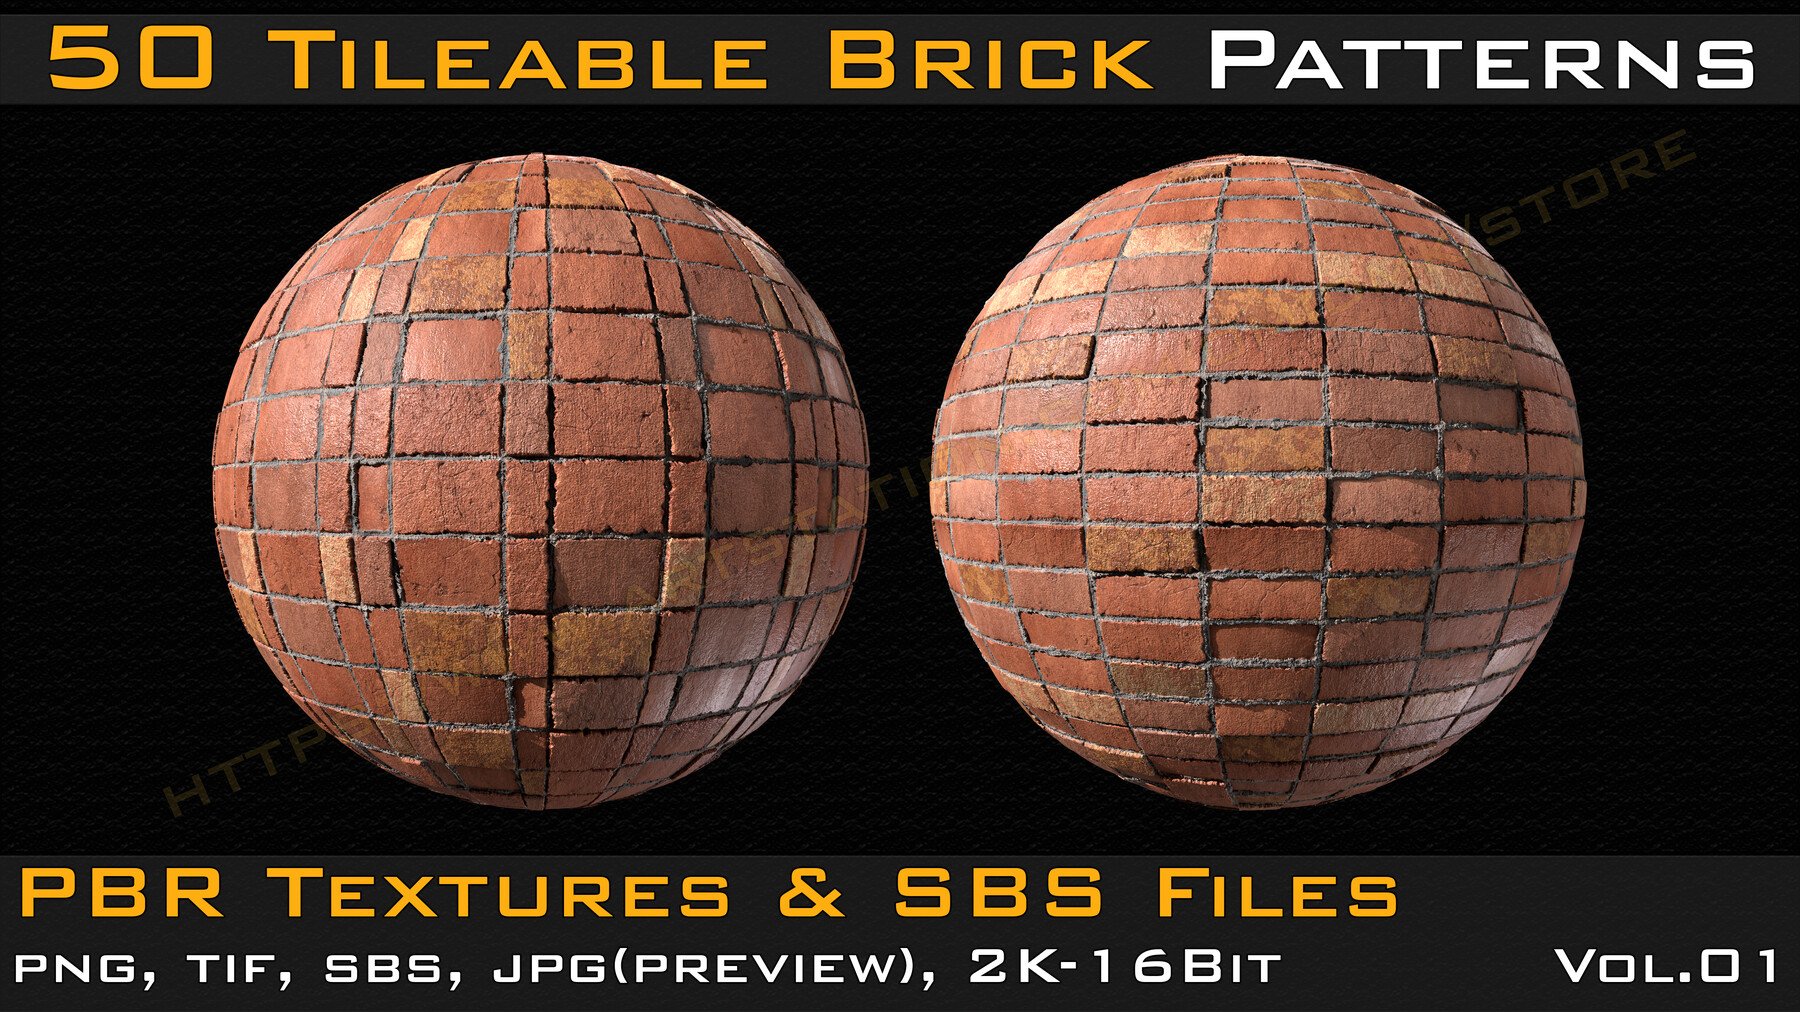 50 Tileable Brick Patterns PBR Textures Vol.01